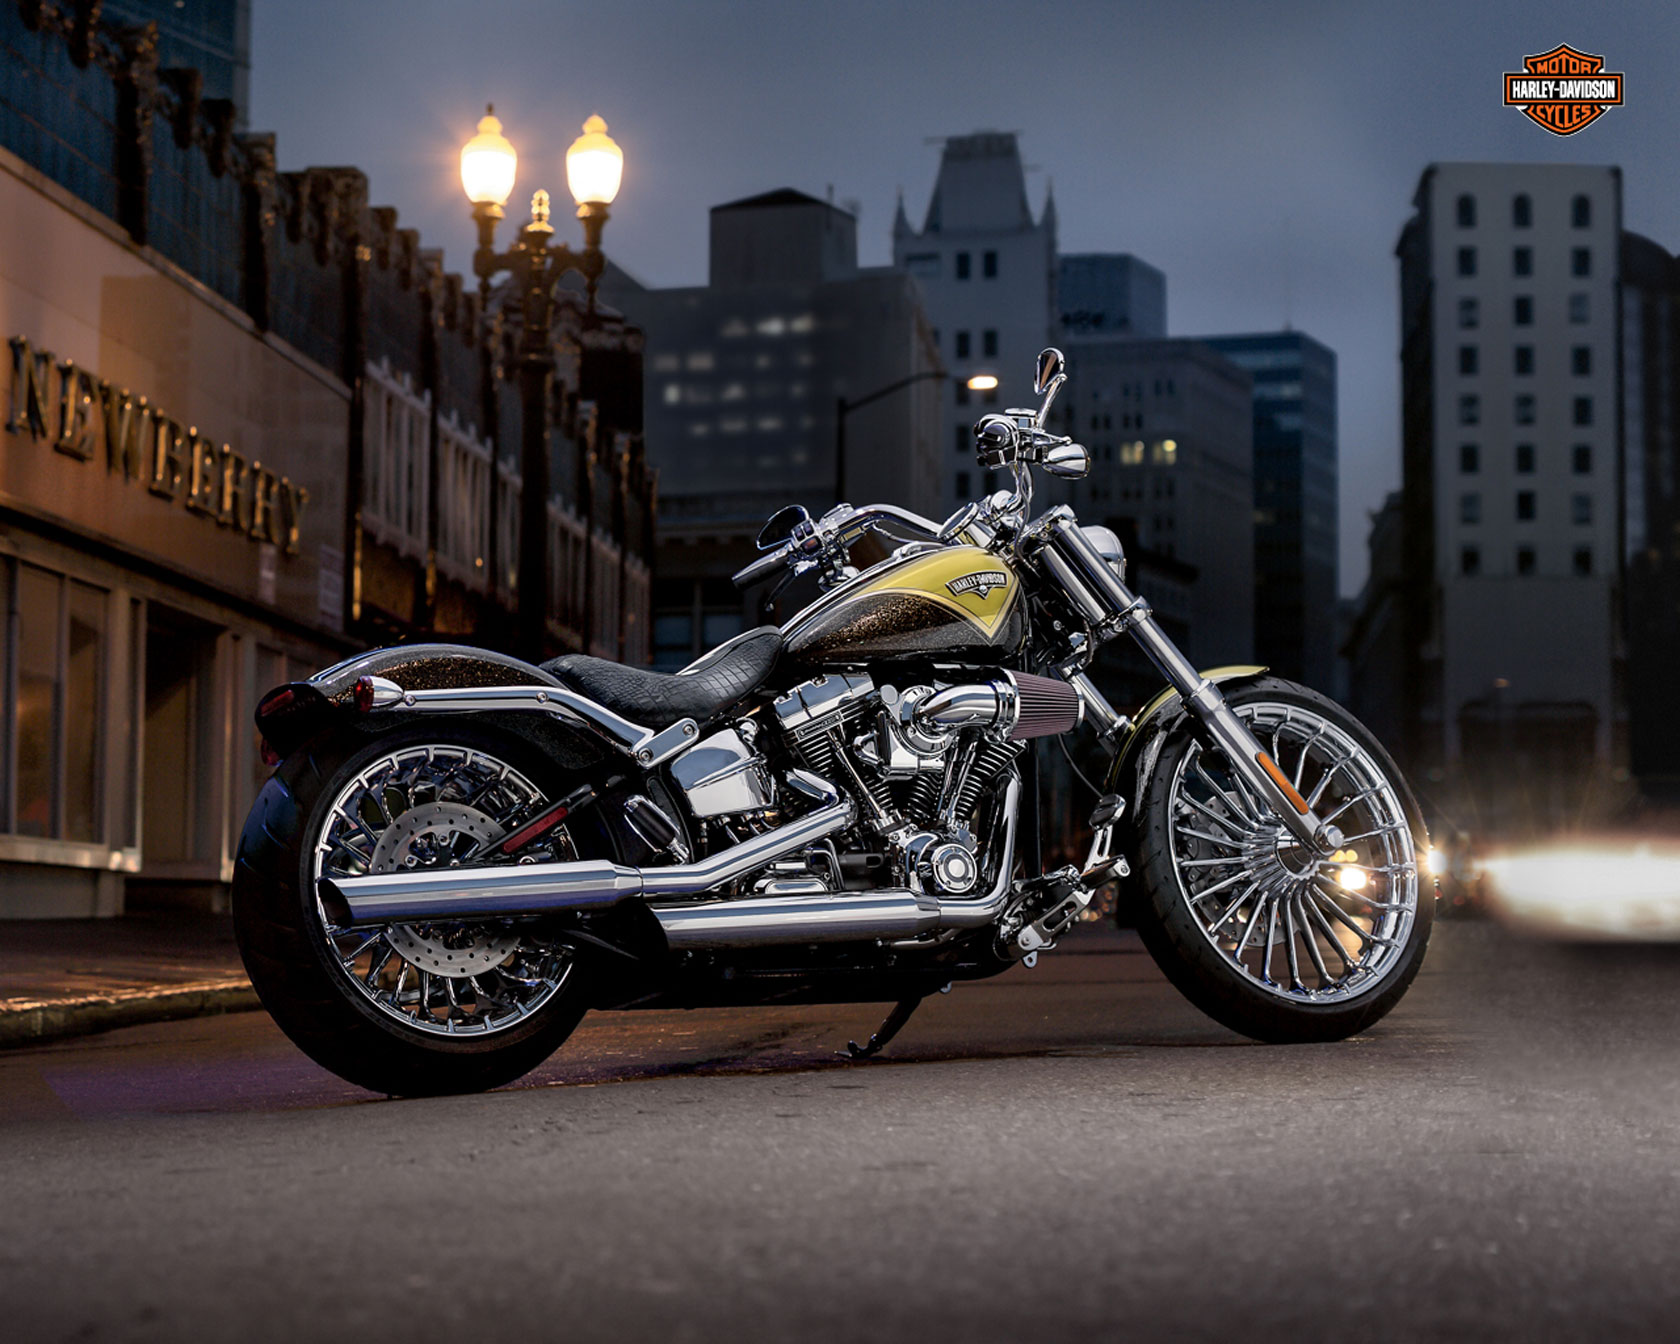 2013 Harley Davidson Fxsbse Cvo Breakout Review